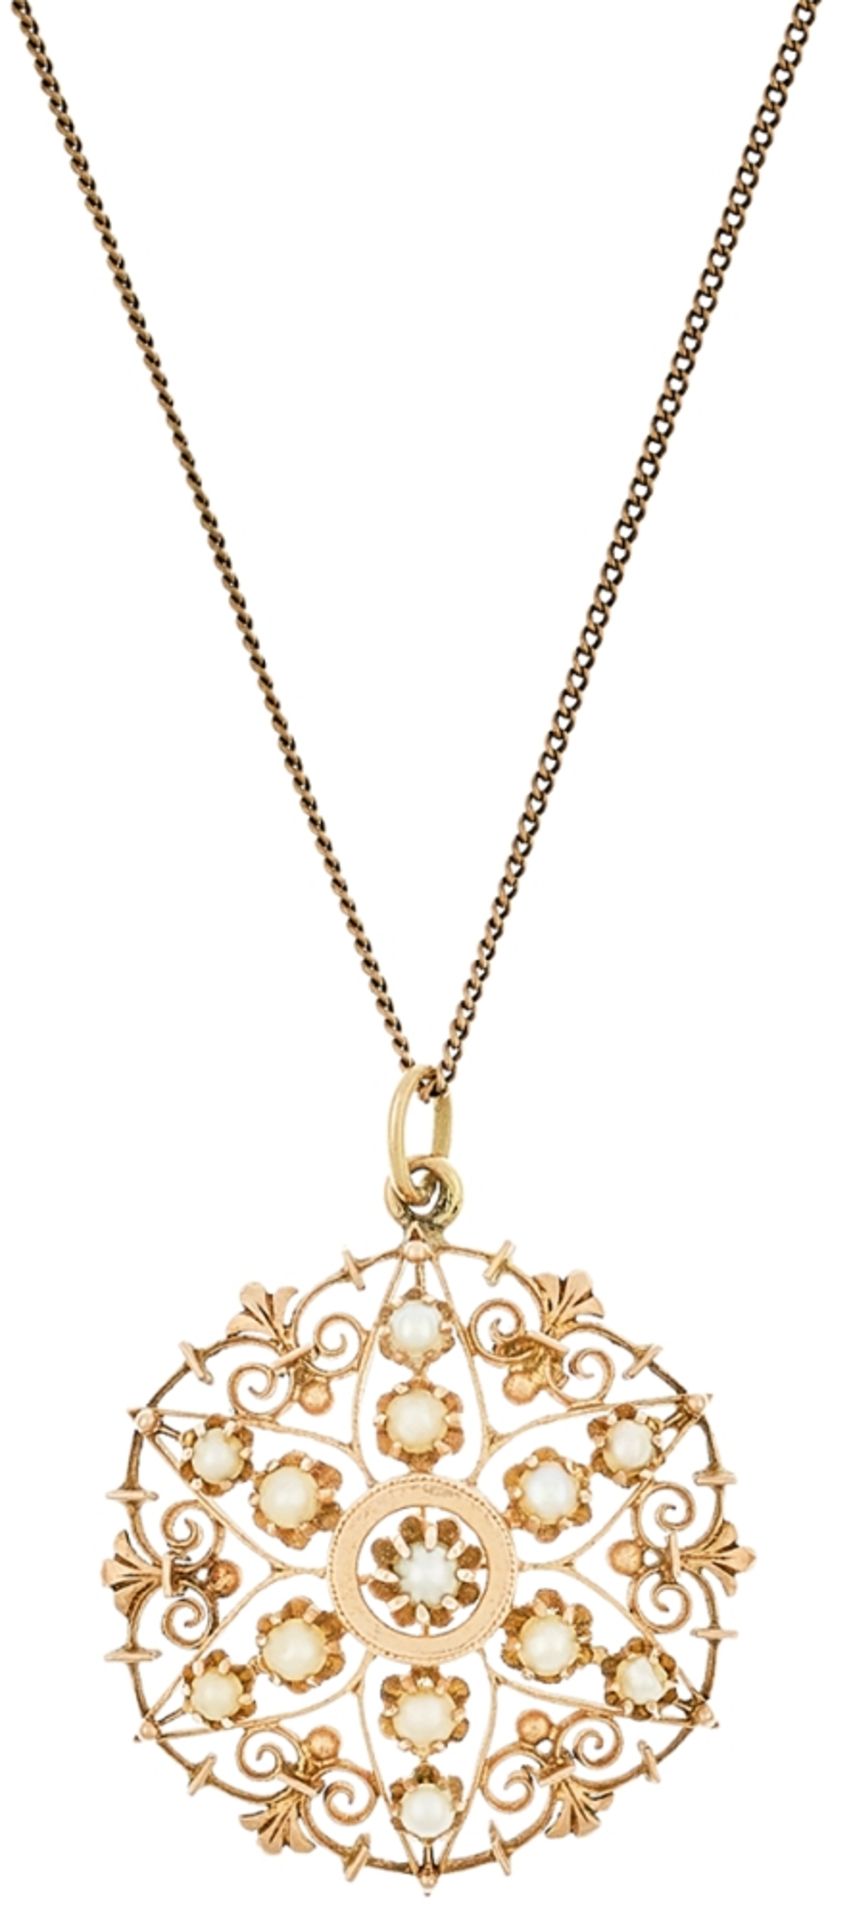 Biedermeier pearls pendant with chain, 8 K rose gold, 5, 2 g, natural pearls stellar organized,